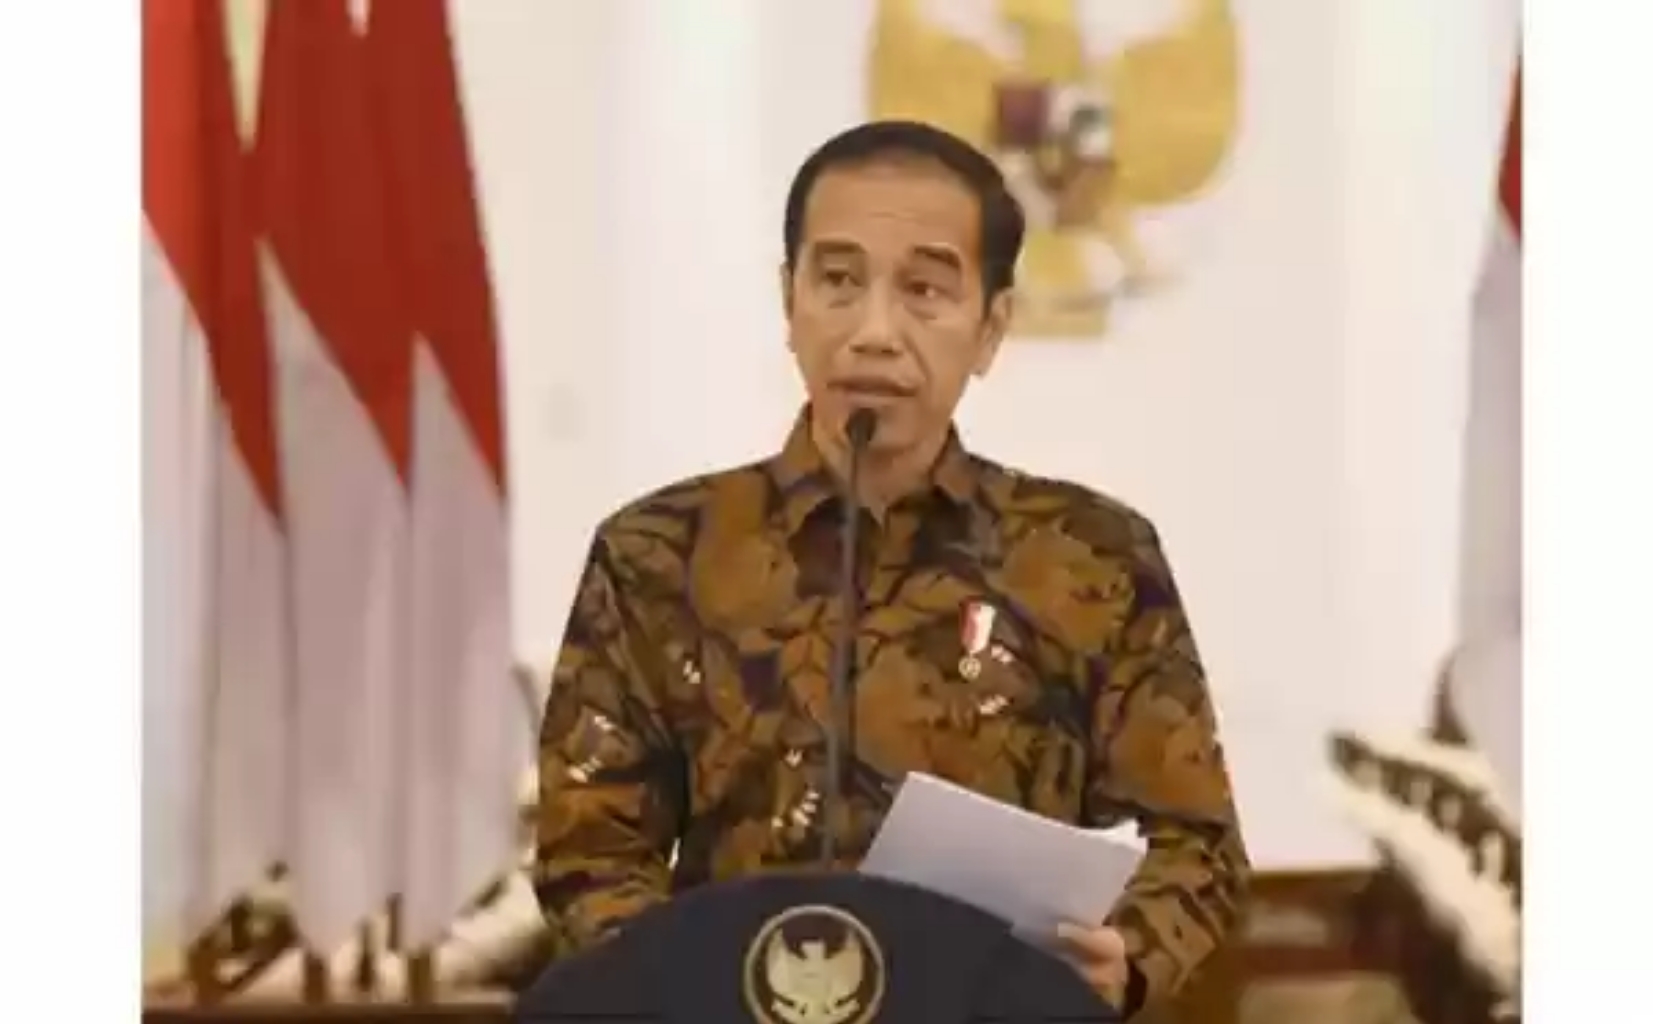 Presiden Jokowi Sebut Hoaks di Medsos Dapat Timbulkan Perpecahan